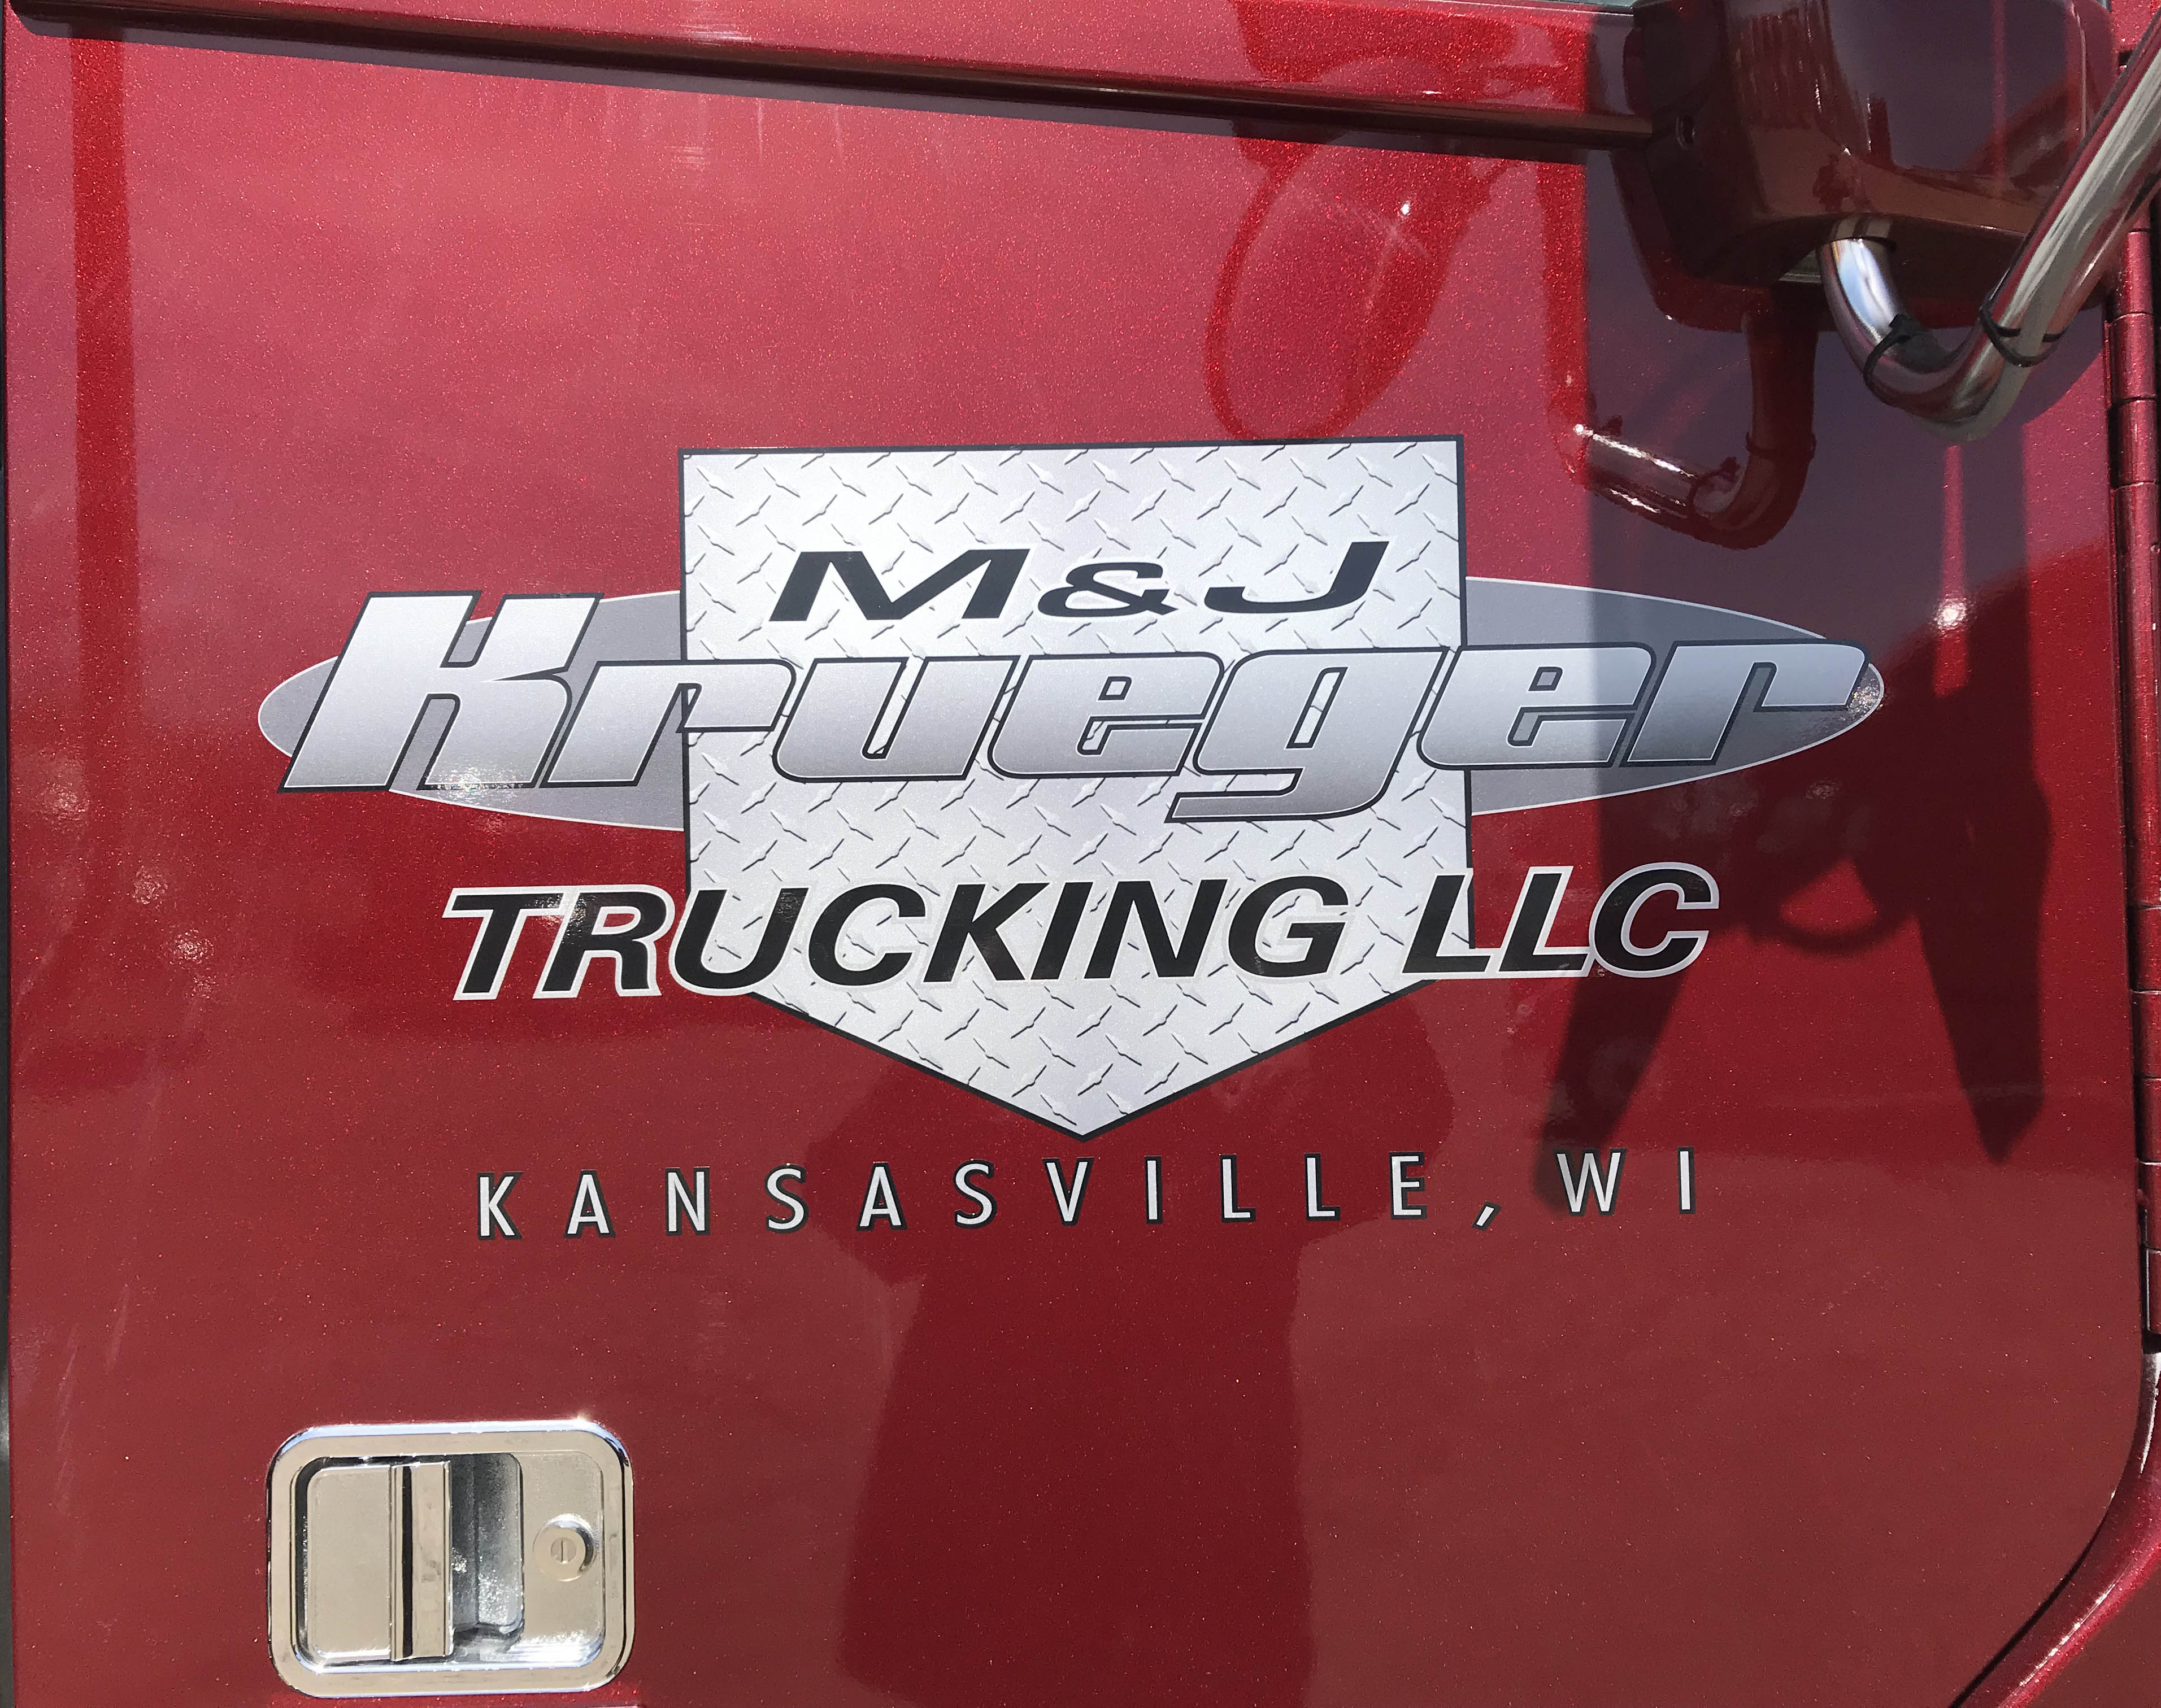 m&j krueger trucking llc truck graphic